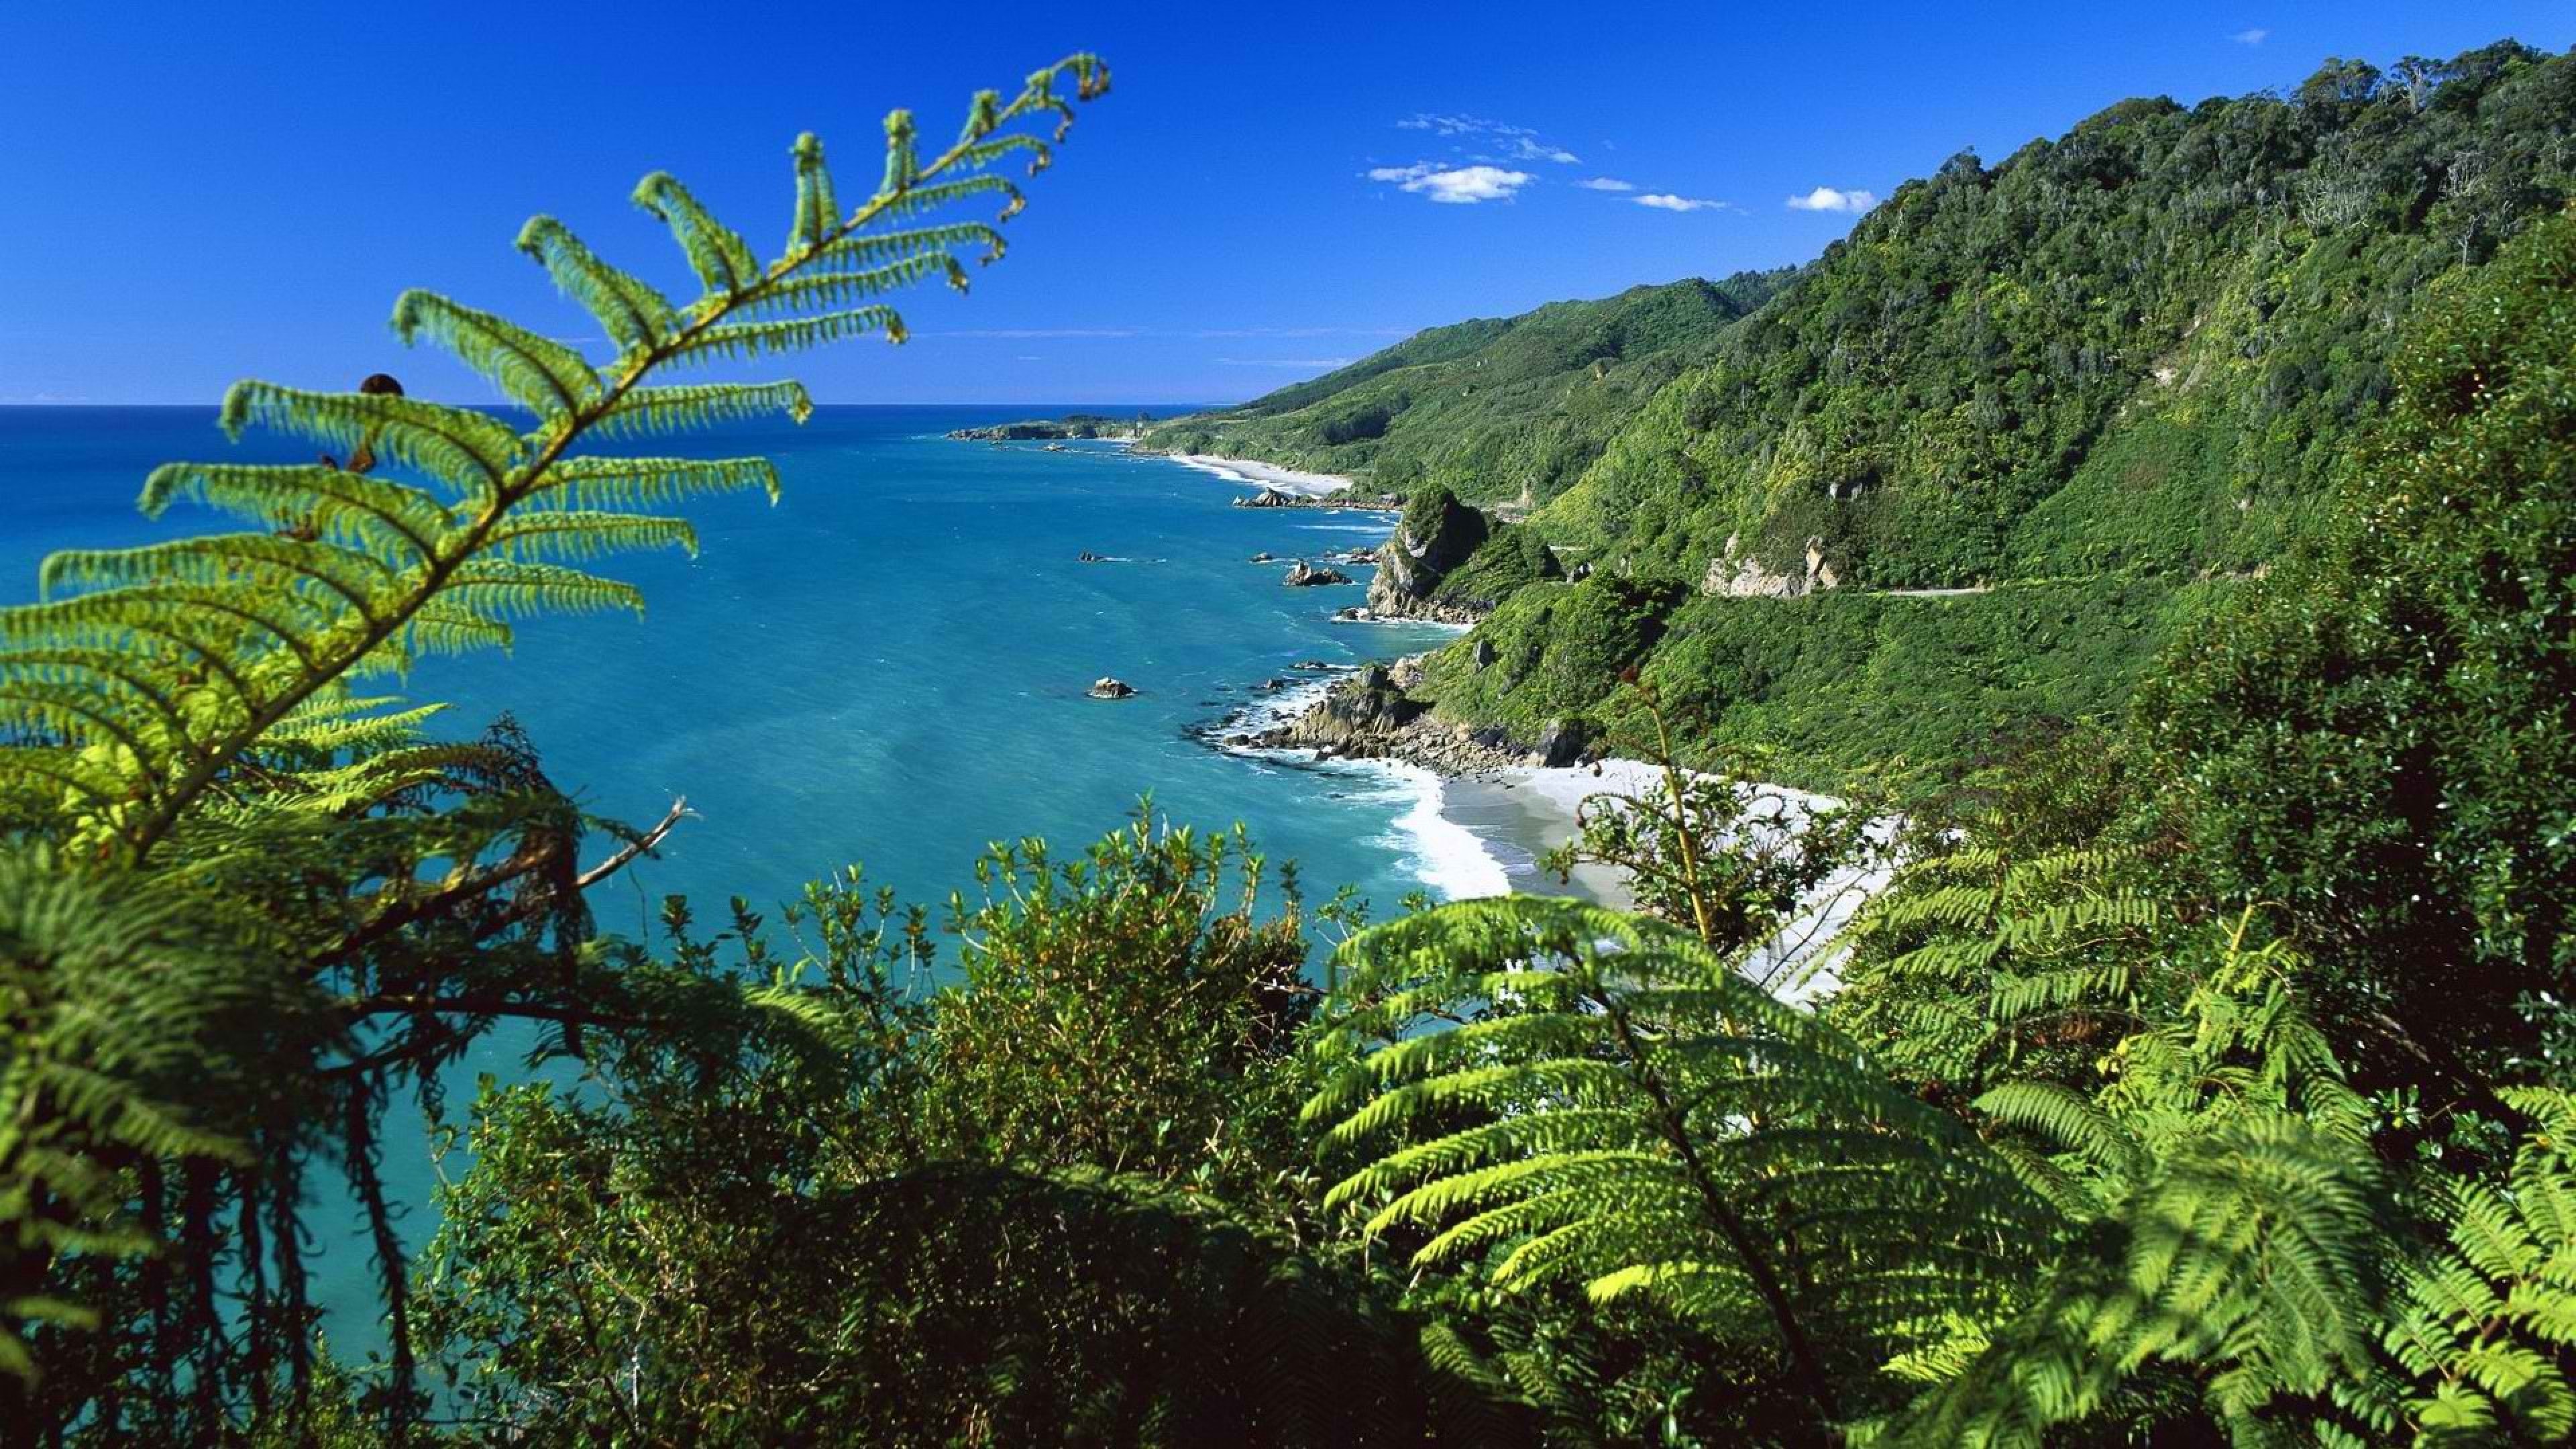 New zealand two islands. Национальный парк Папароа новая Зеландия. Новая Зеландия (New Zealand). Новая Зеландия Южный остров. Новая Зеландия природа Окланд.